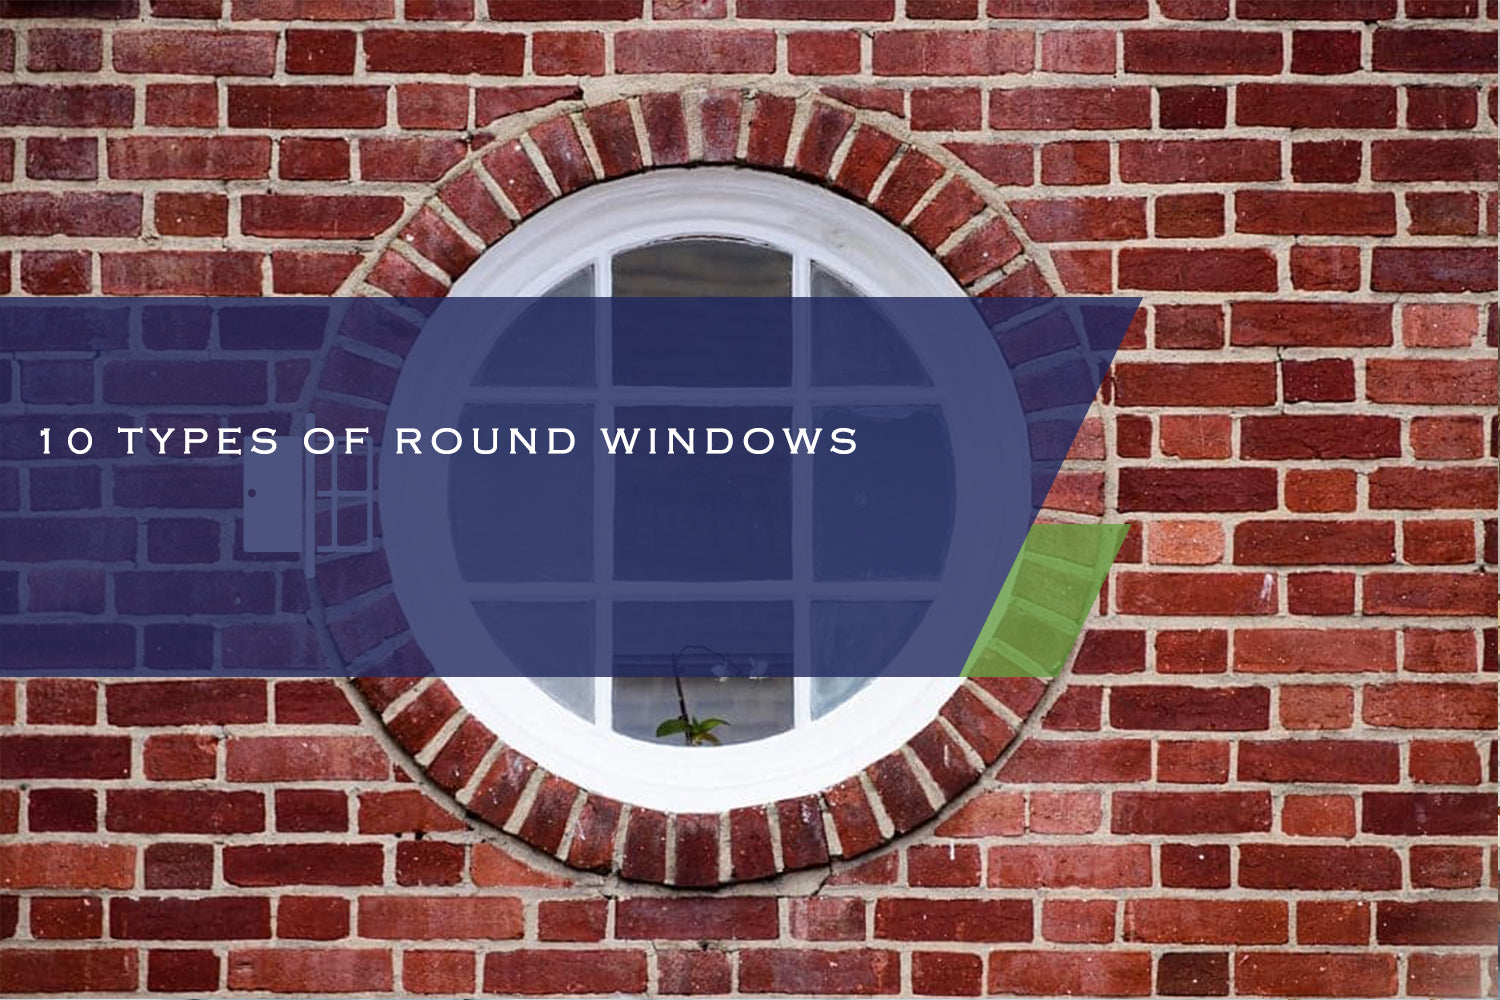 10 Types of Round Windows